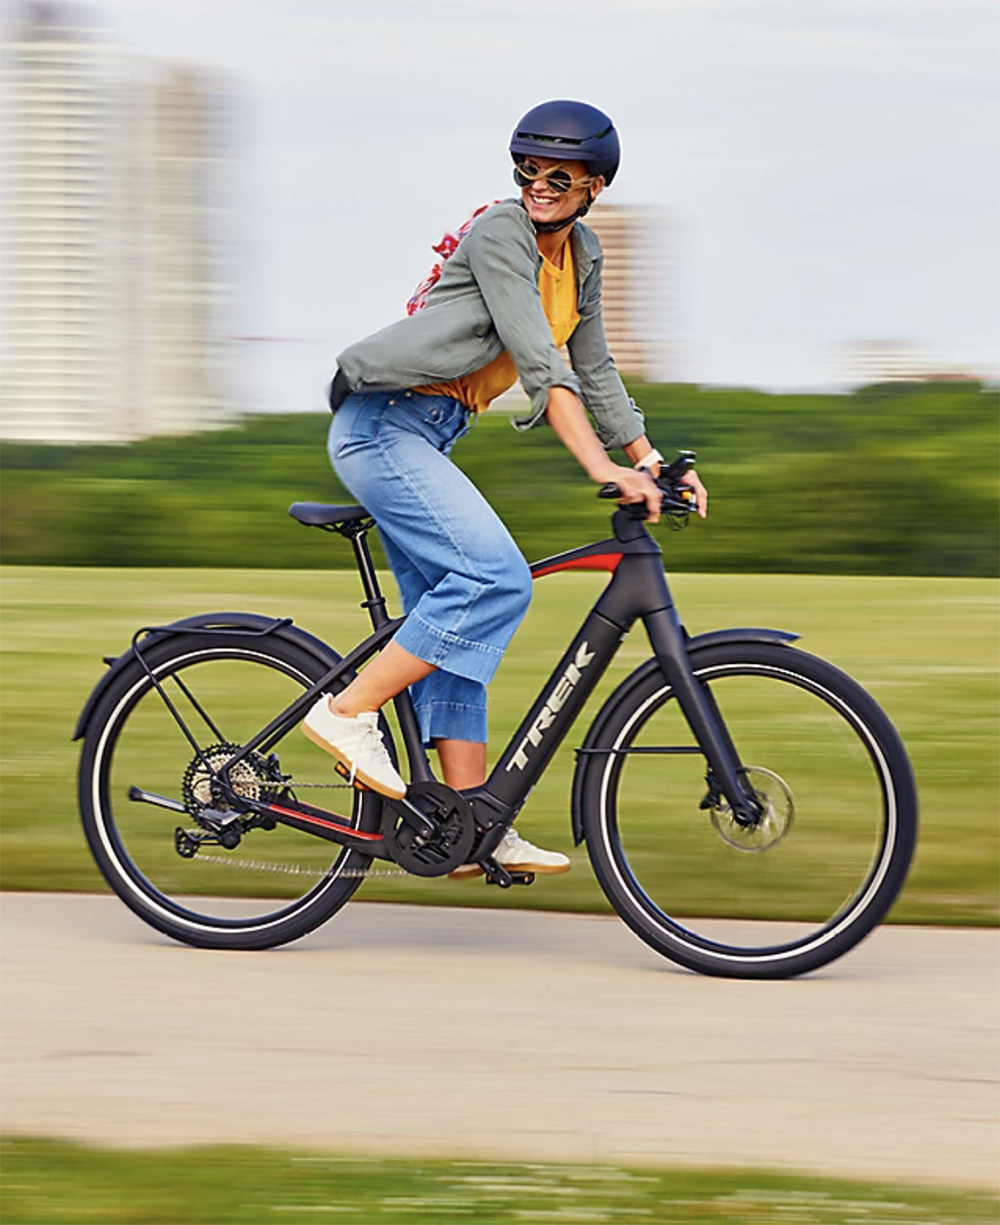 commuter riding electric bike